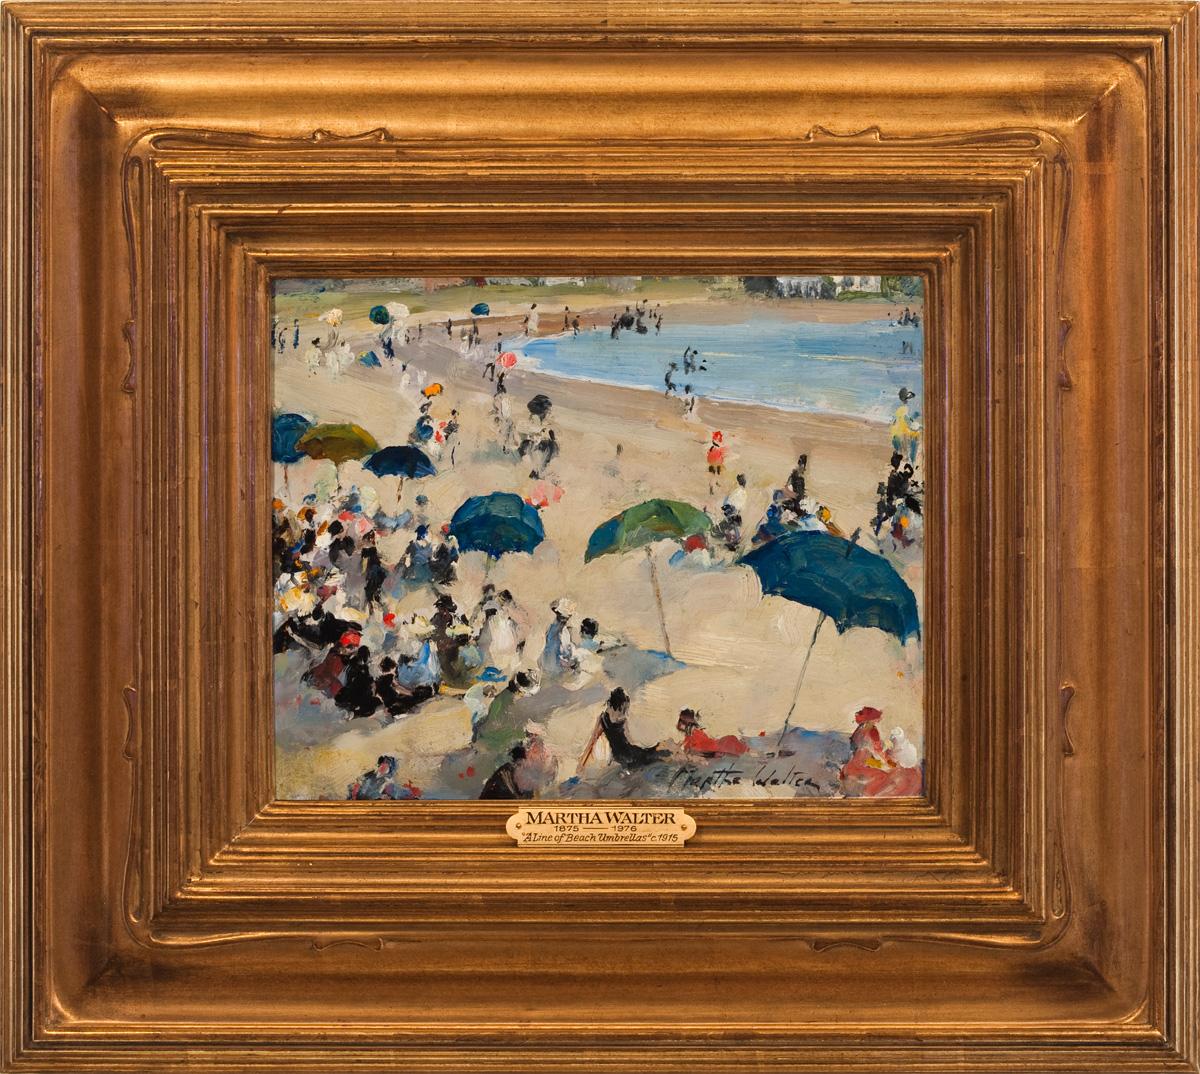 Martha Walter Landscape Painting - "A Line of Beach Umbrellas"